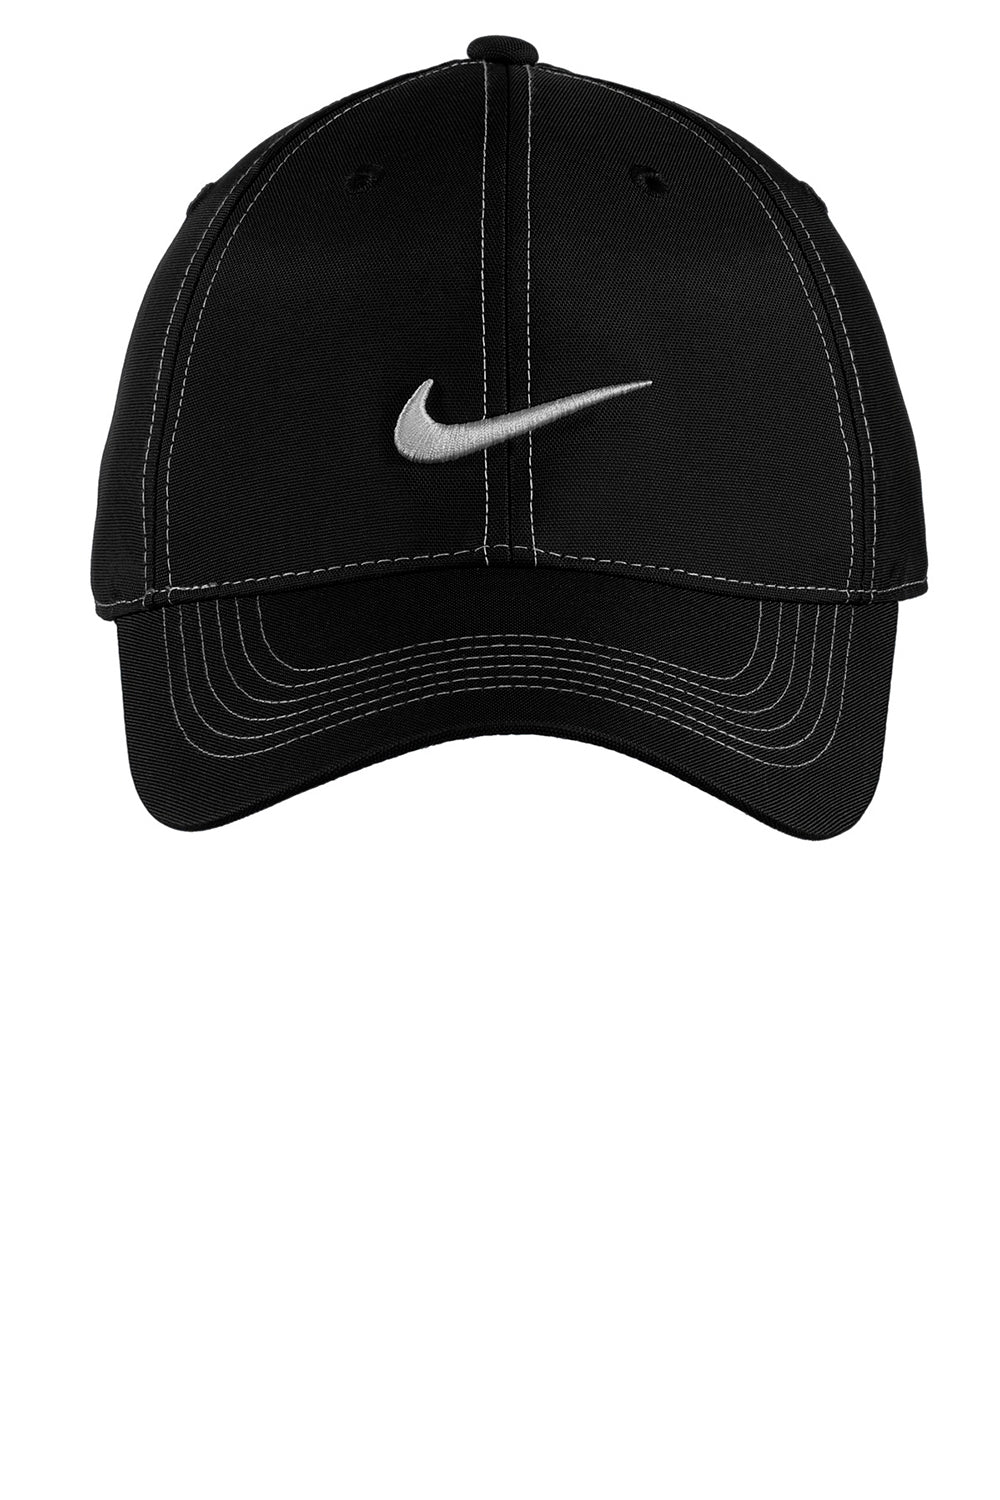 Nike 333114 Mens Water Resistant Adjustable Hat Black Flat Front